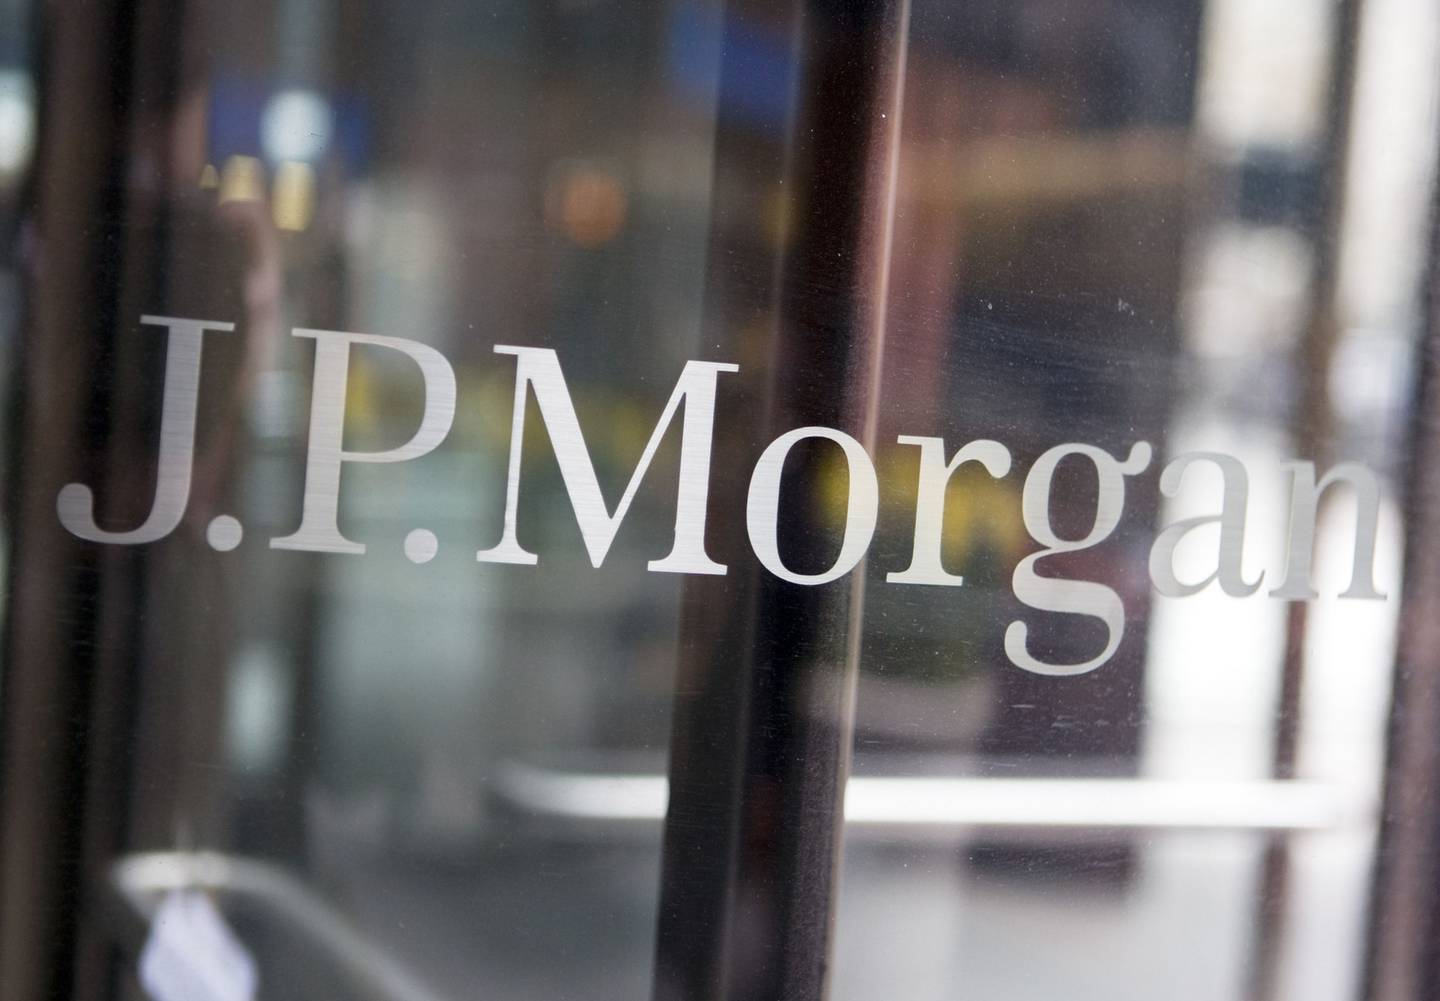 Logo de JPMorgan Chase & Co. en una puerta. Fotógrafo: ANDREW HARRER